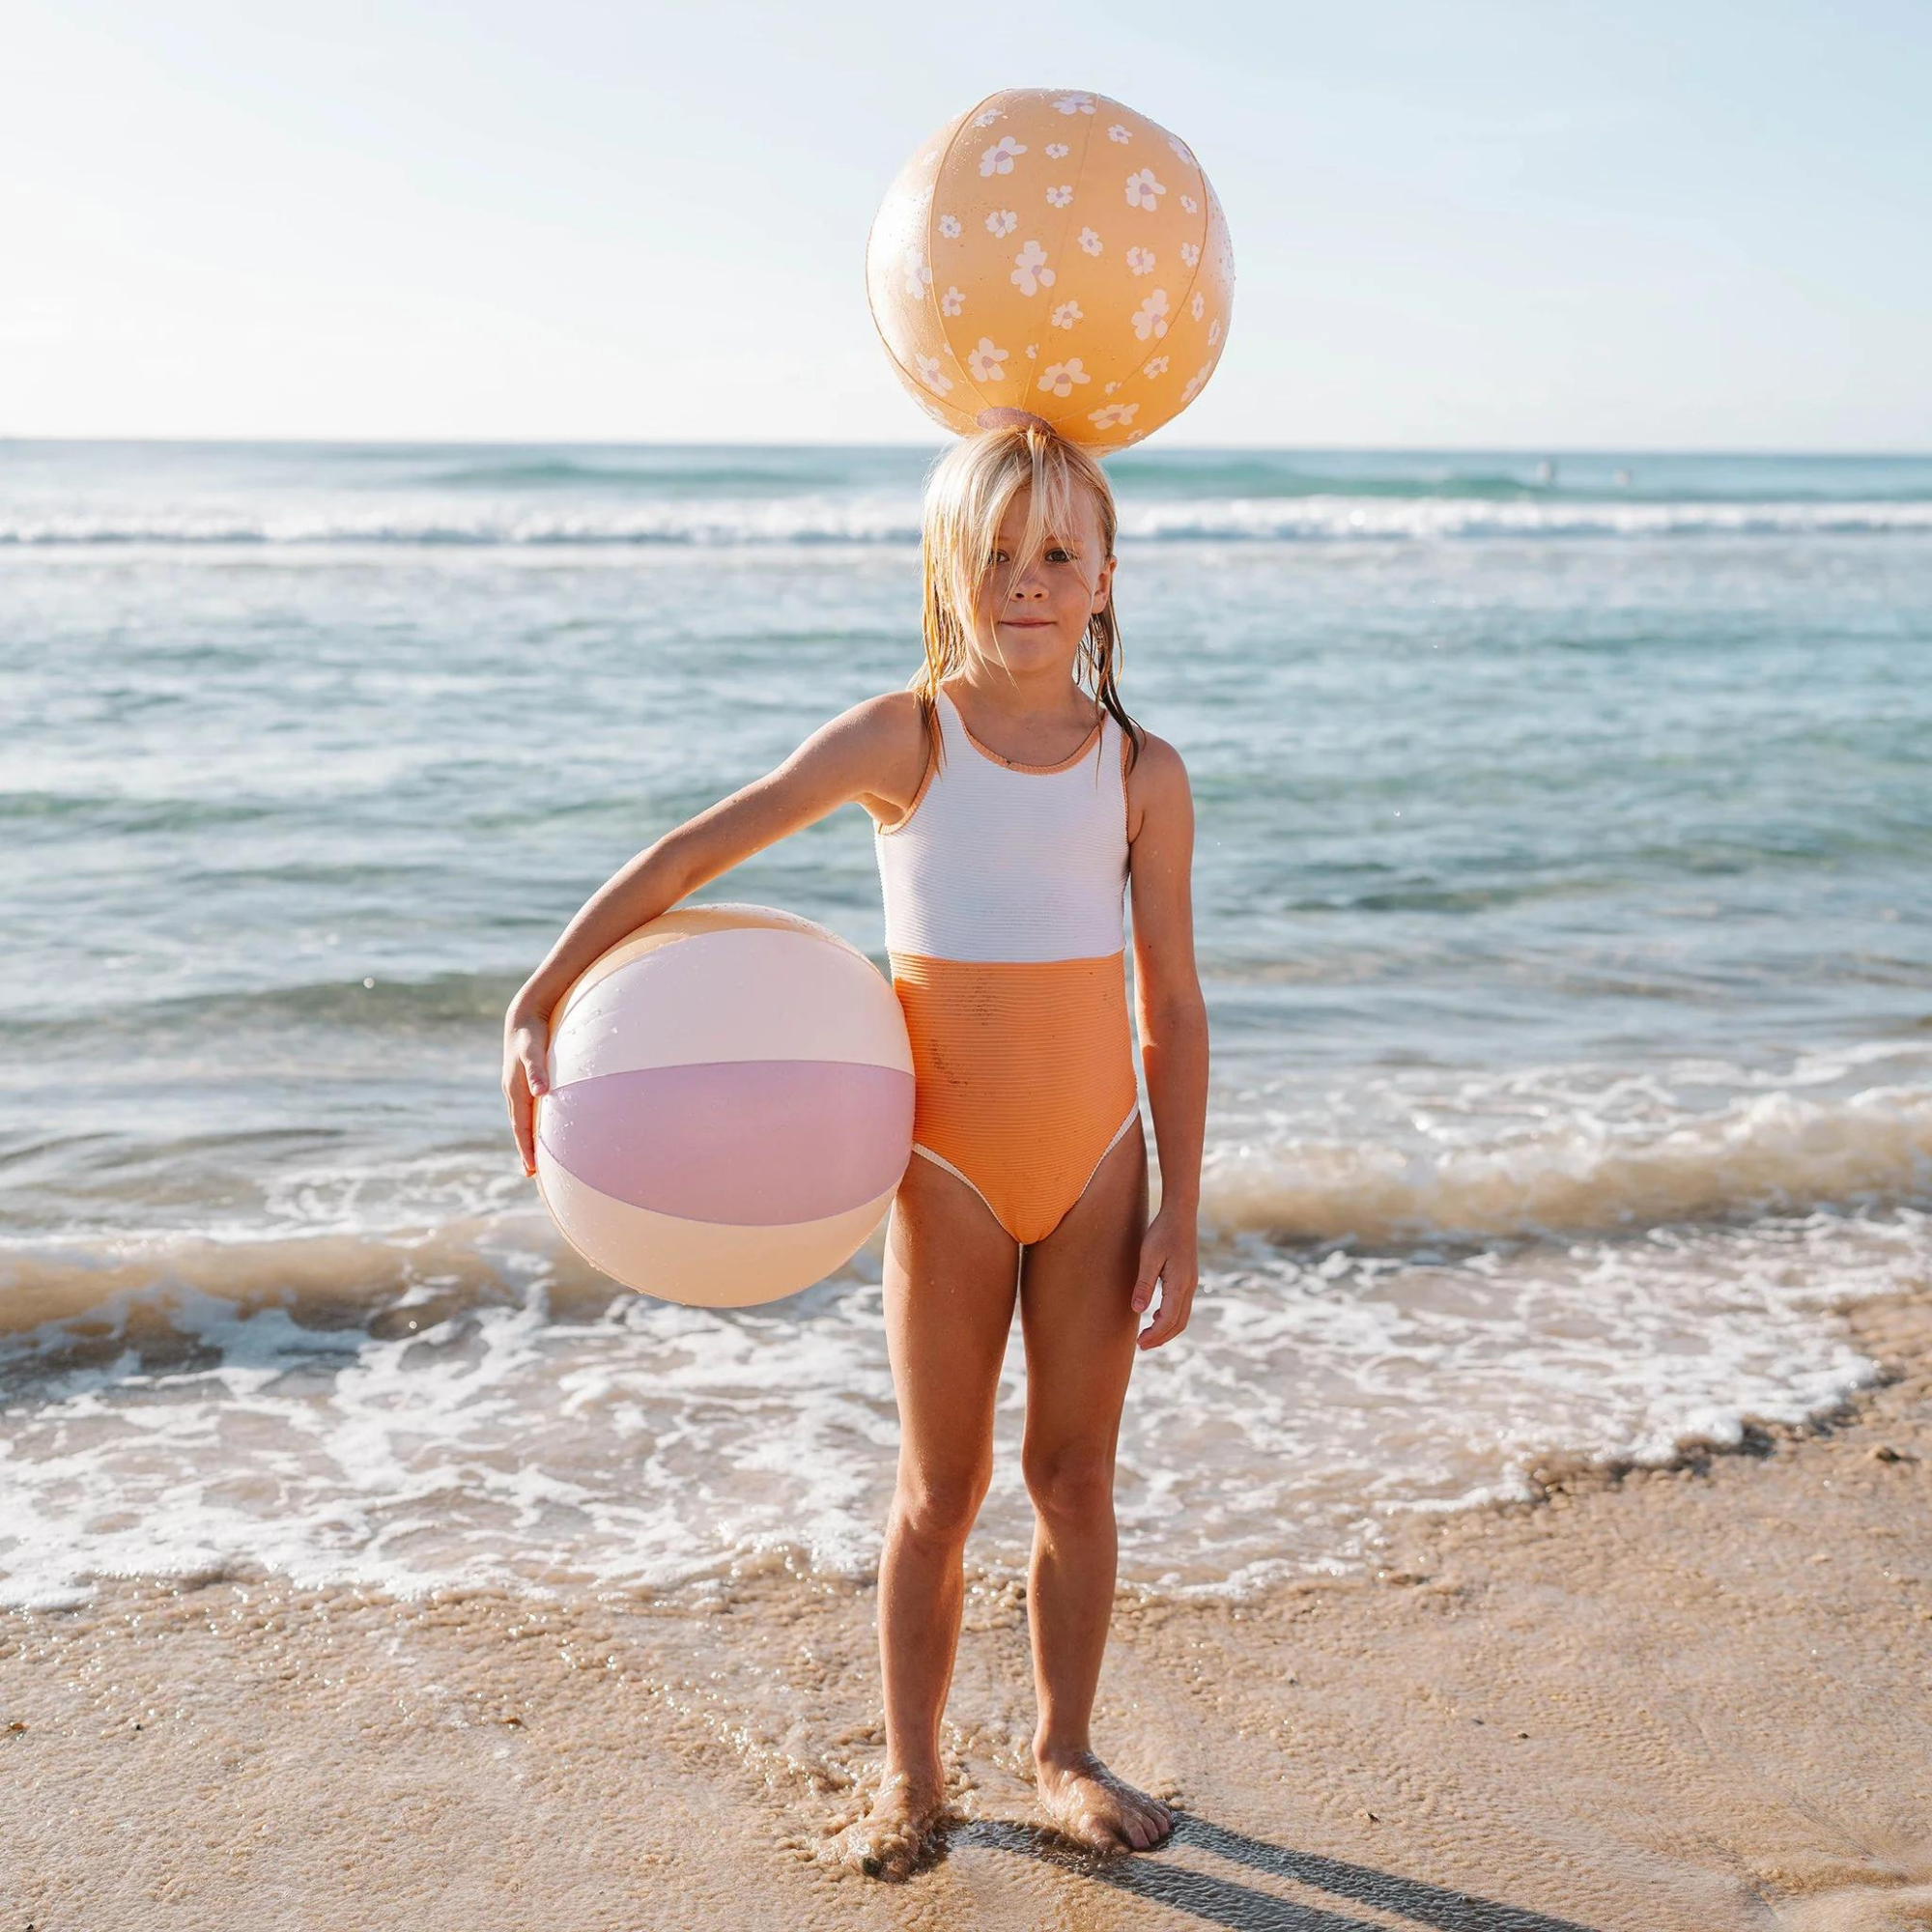 Set of inflatable beach balls (2 pcs)